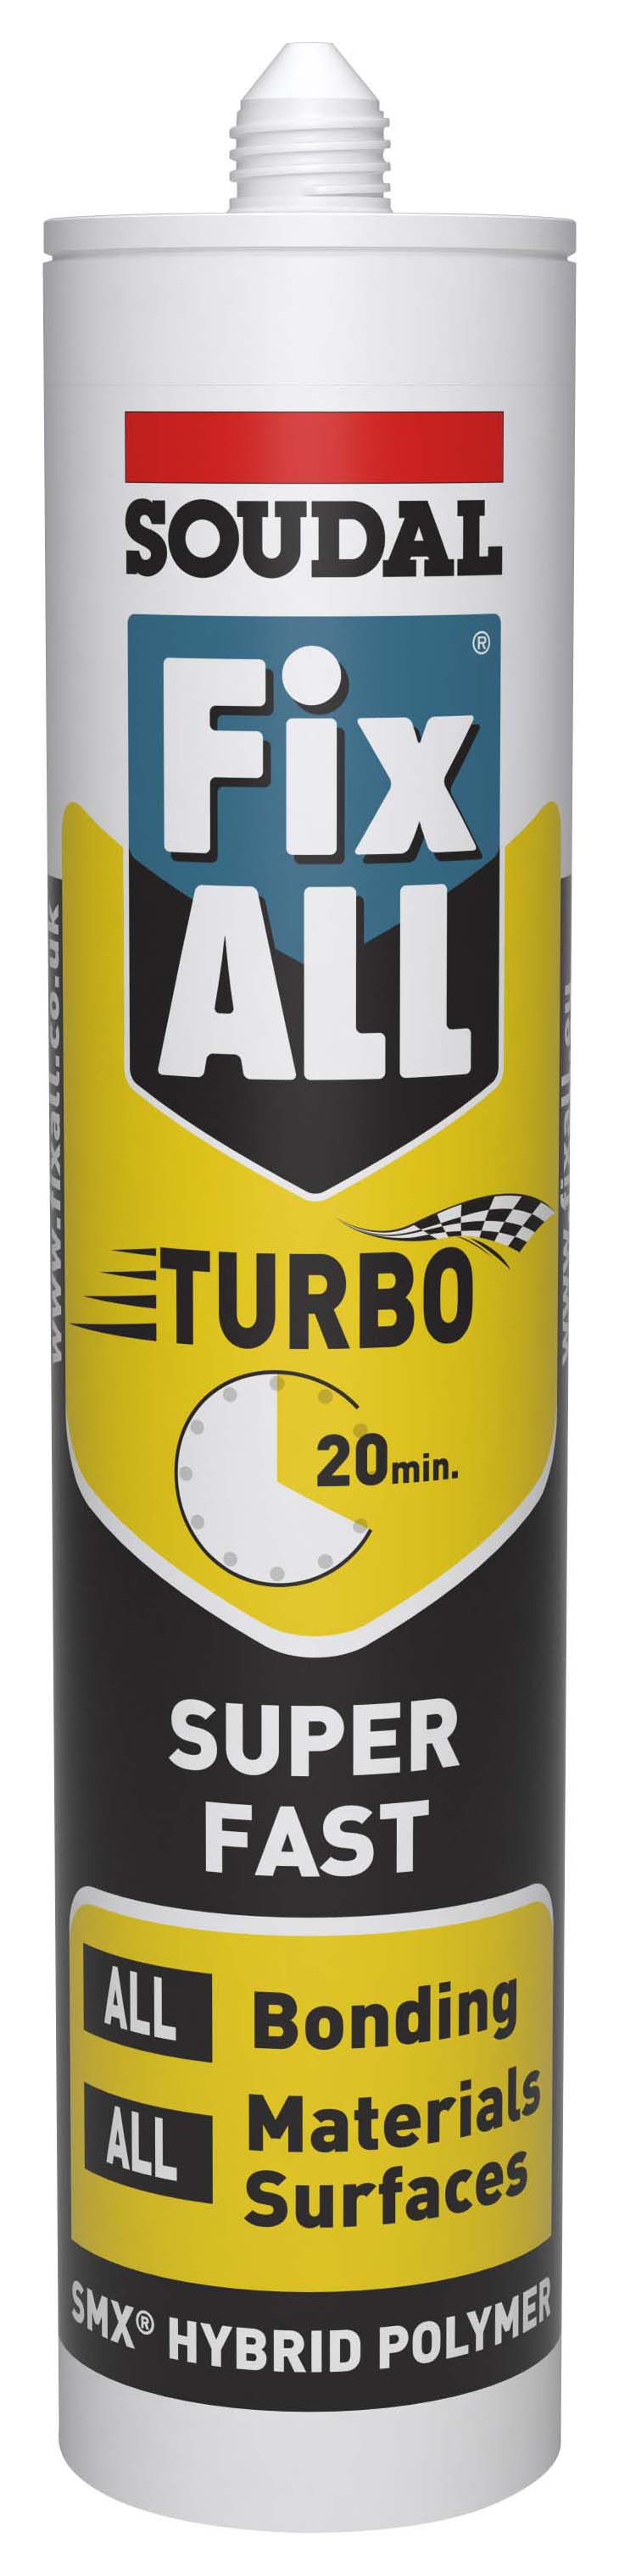 Image of Soudal Fix ALL Turbo Hybrid Adhesive - 290ml